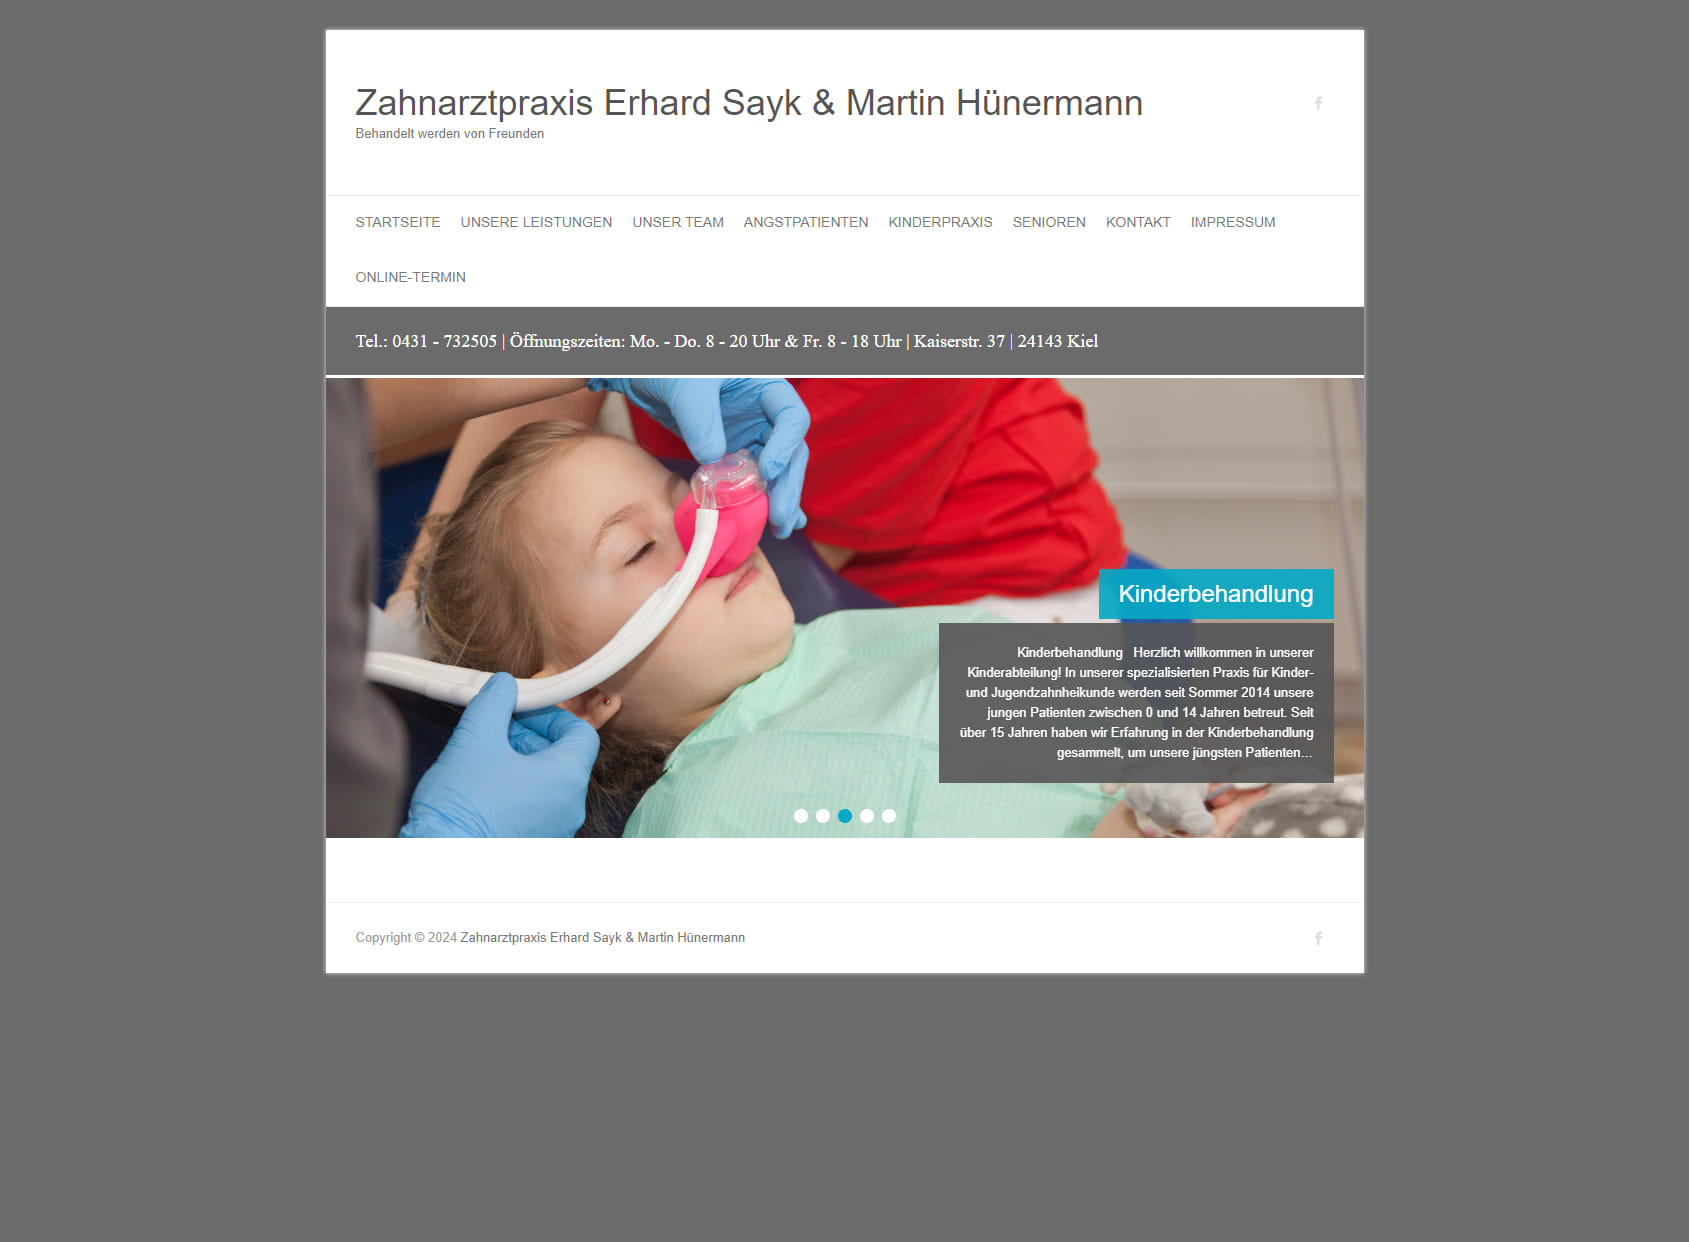 Zahnarztpraxis Erhard Sayk & Martin Hünermann